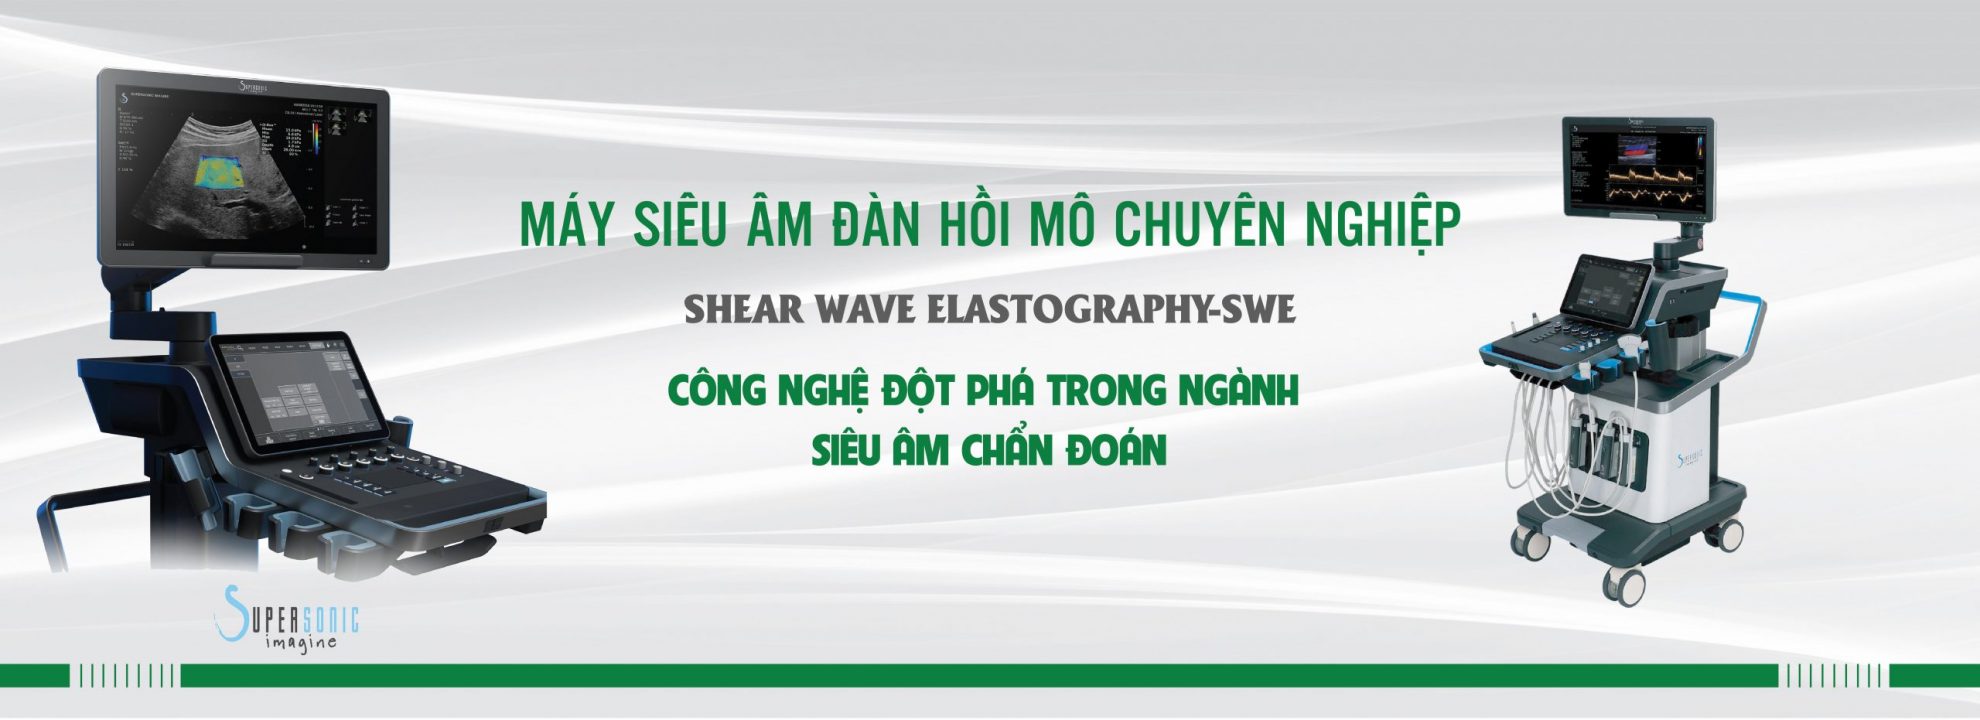 Banner Sieu am dan hoi mo - Cty Nhat Khoa - 1980x720px-01